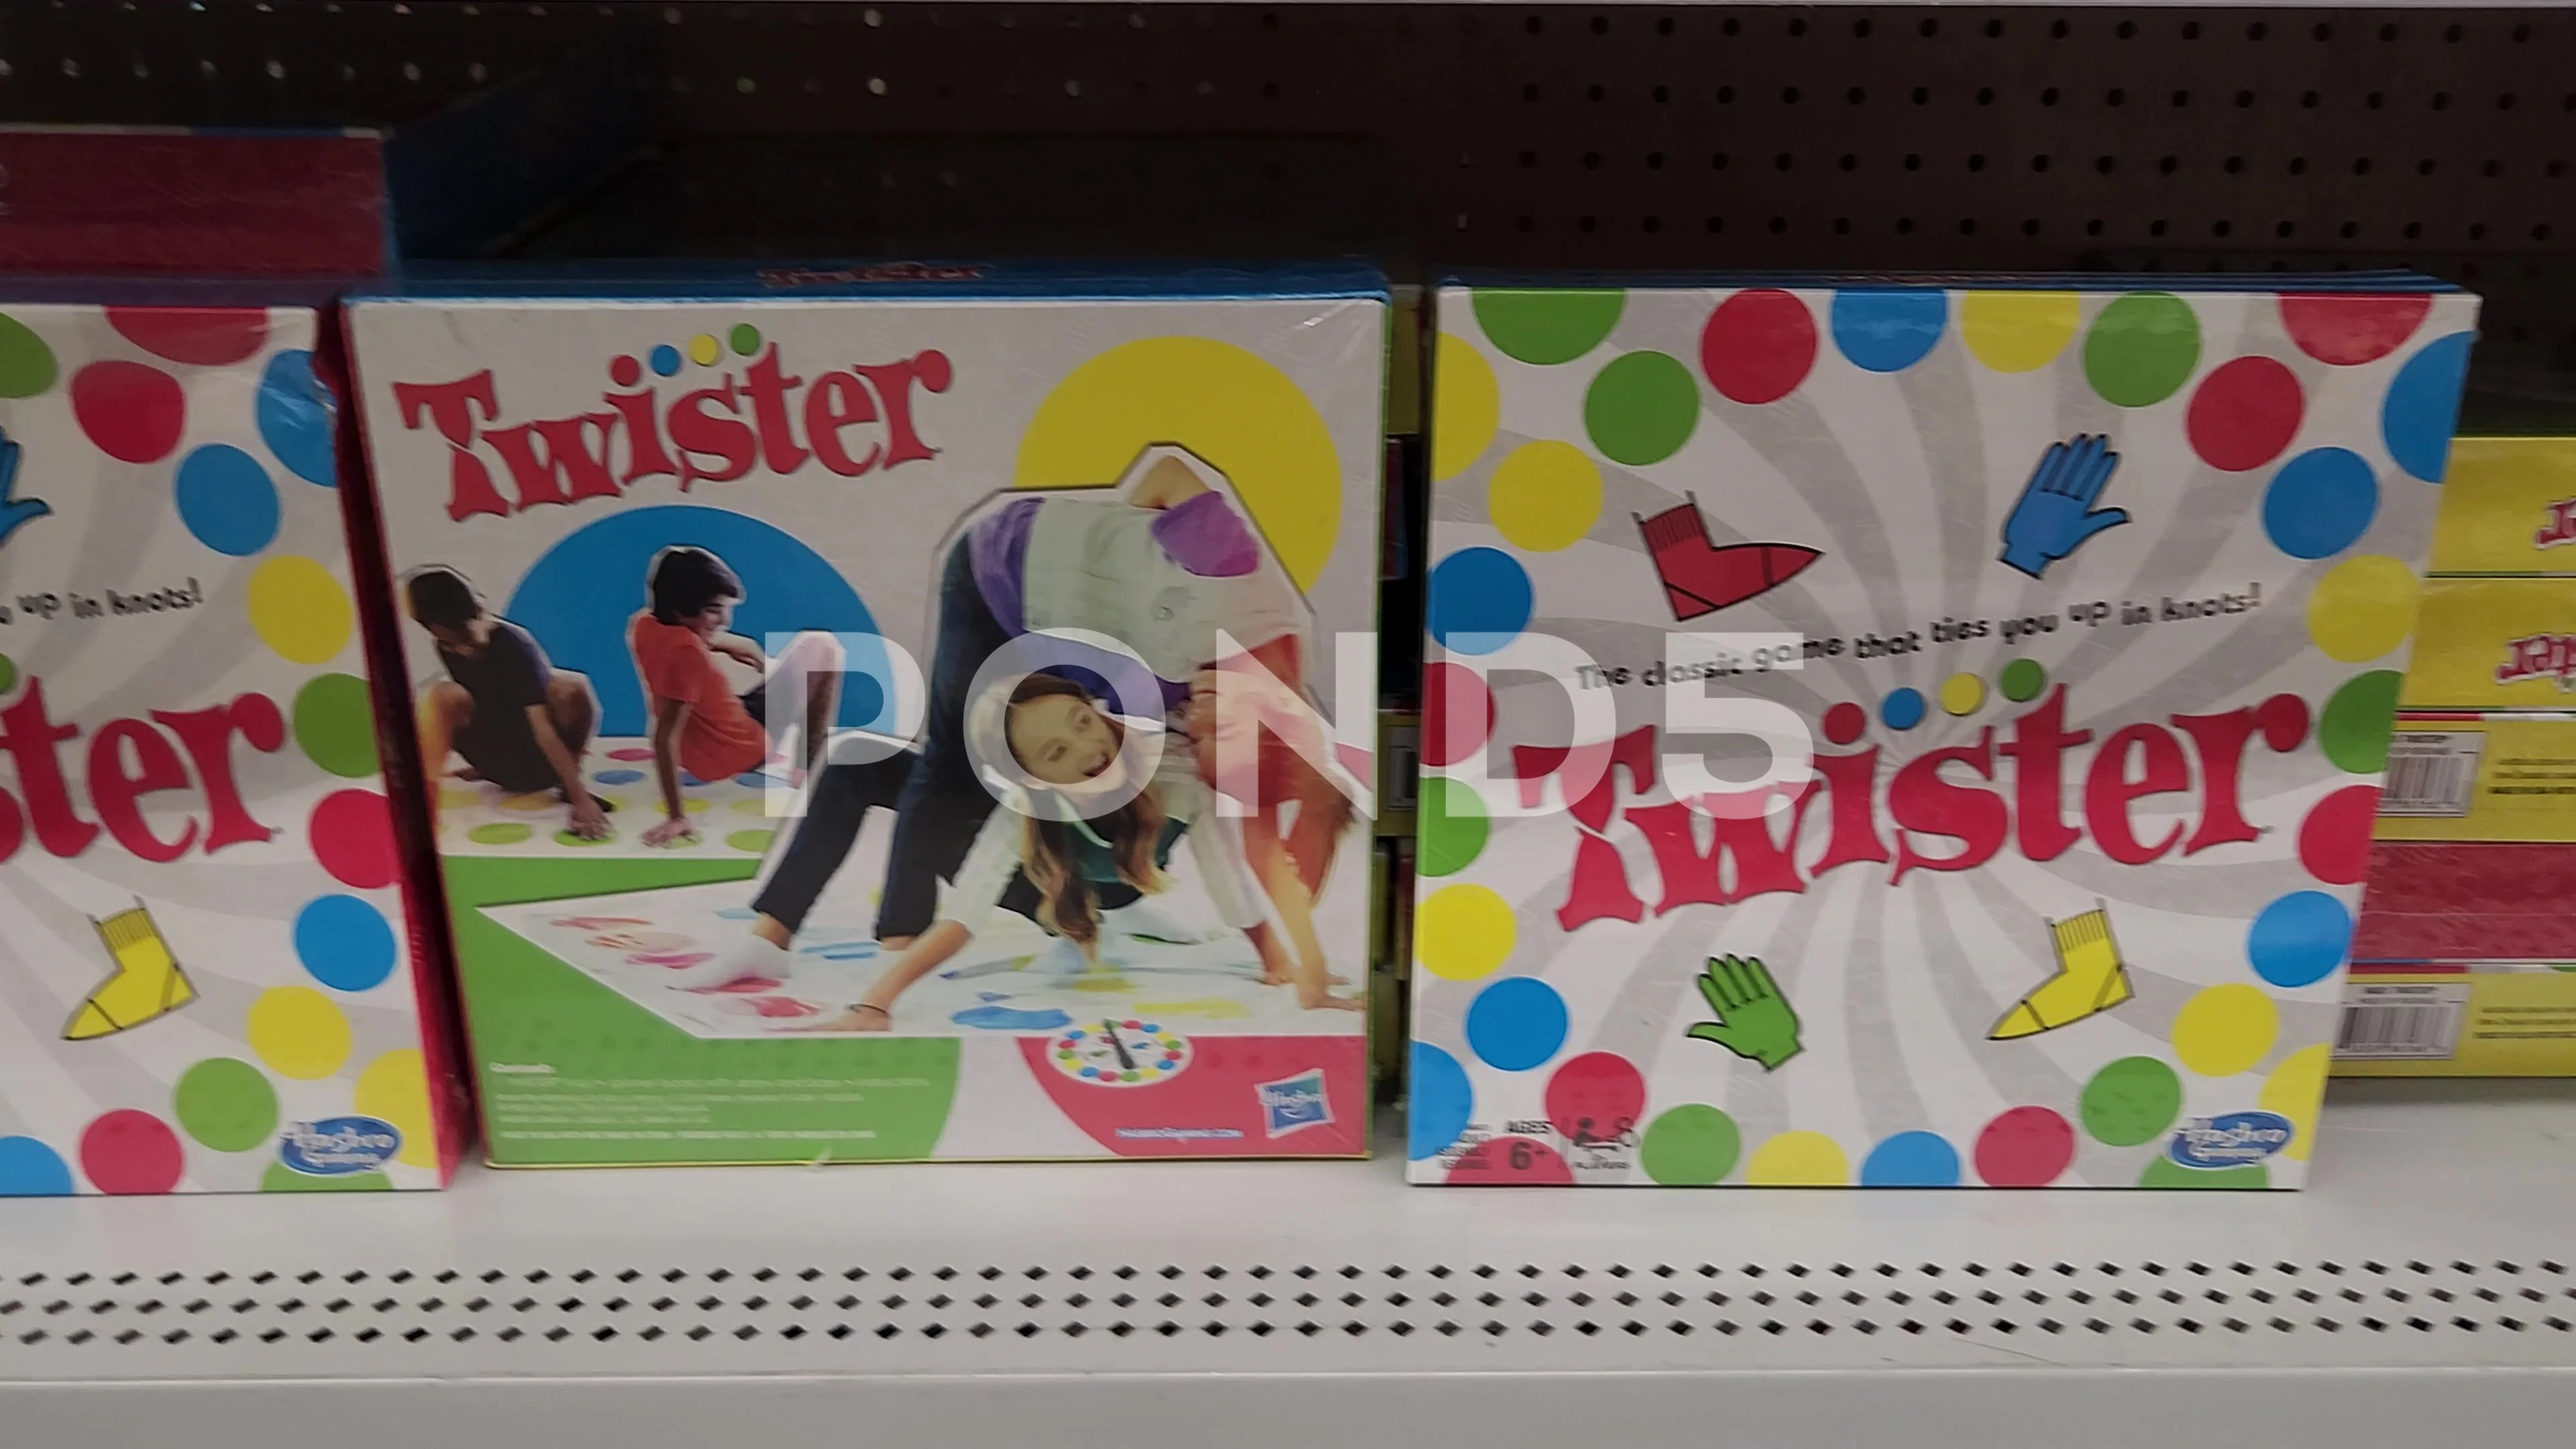 Twister Junior Board Game Retailer, Stock Video